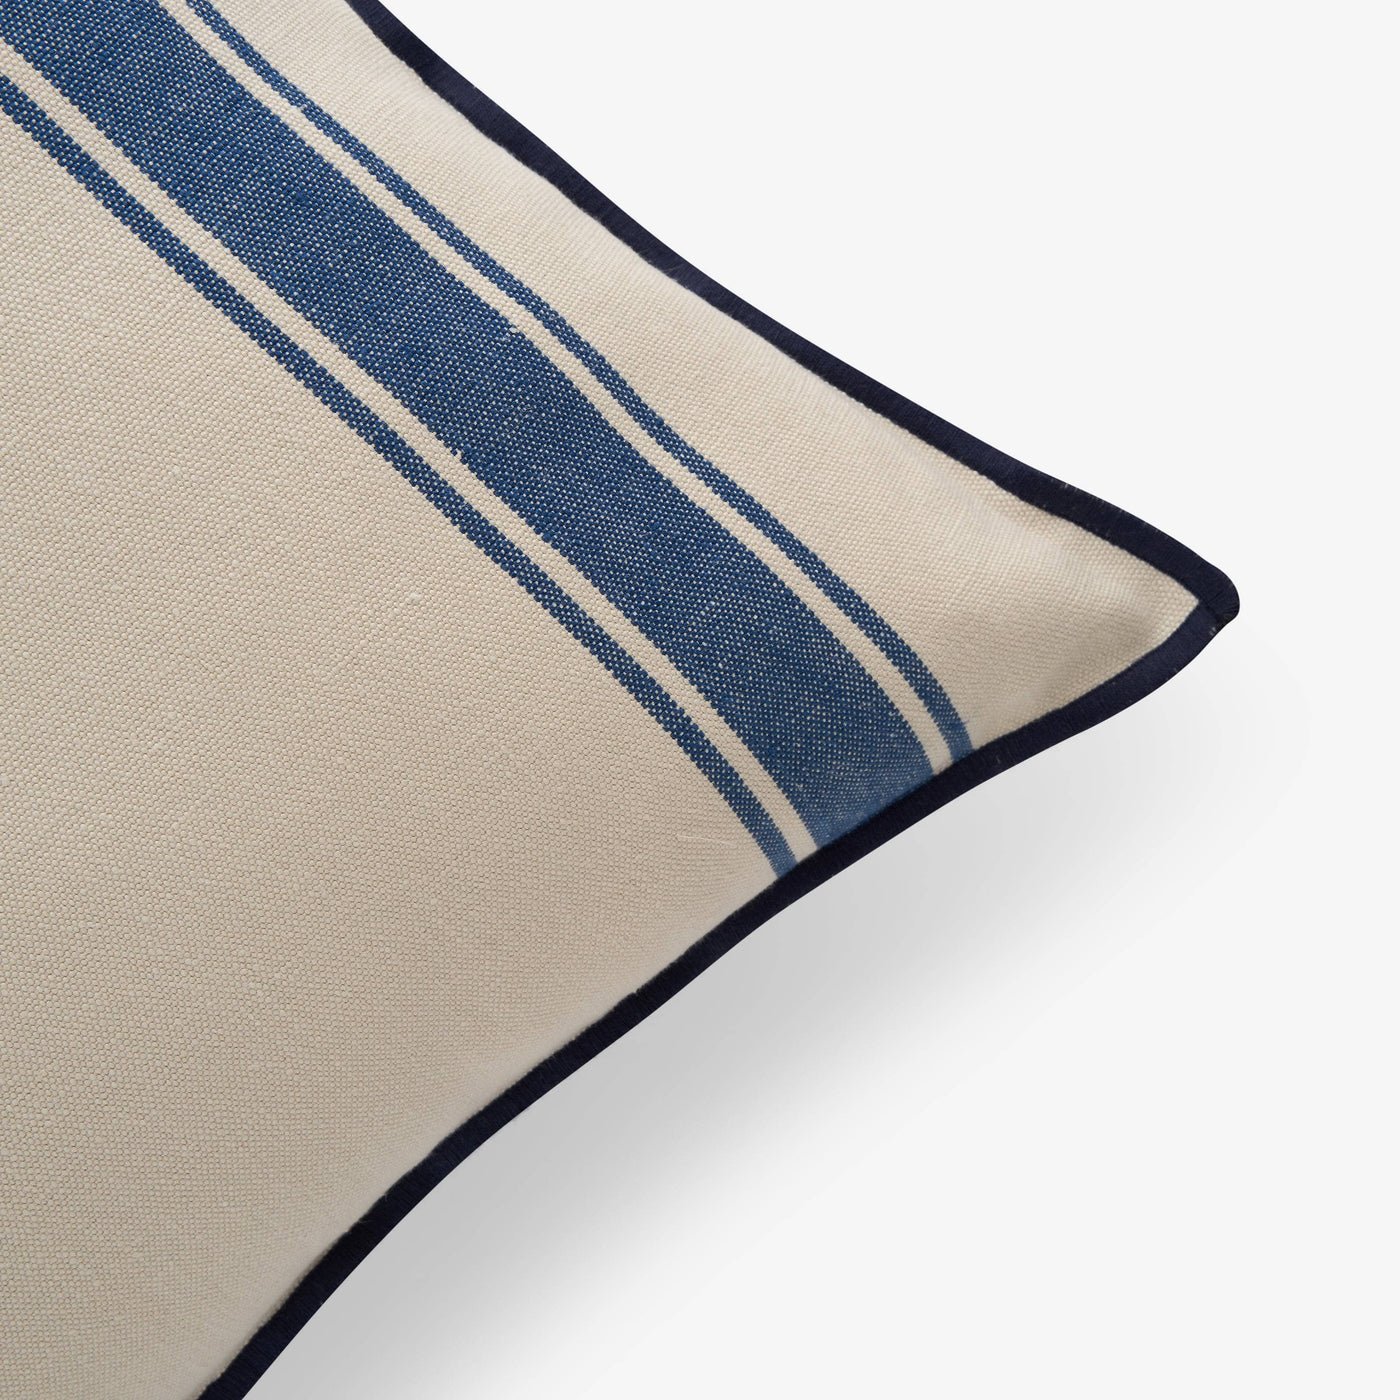 Lido Striped Linen Cushion Cover, Natural - Blue, 45x45 cm Cushion Covers sazy.com